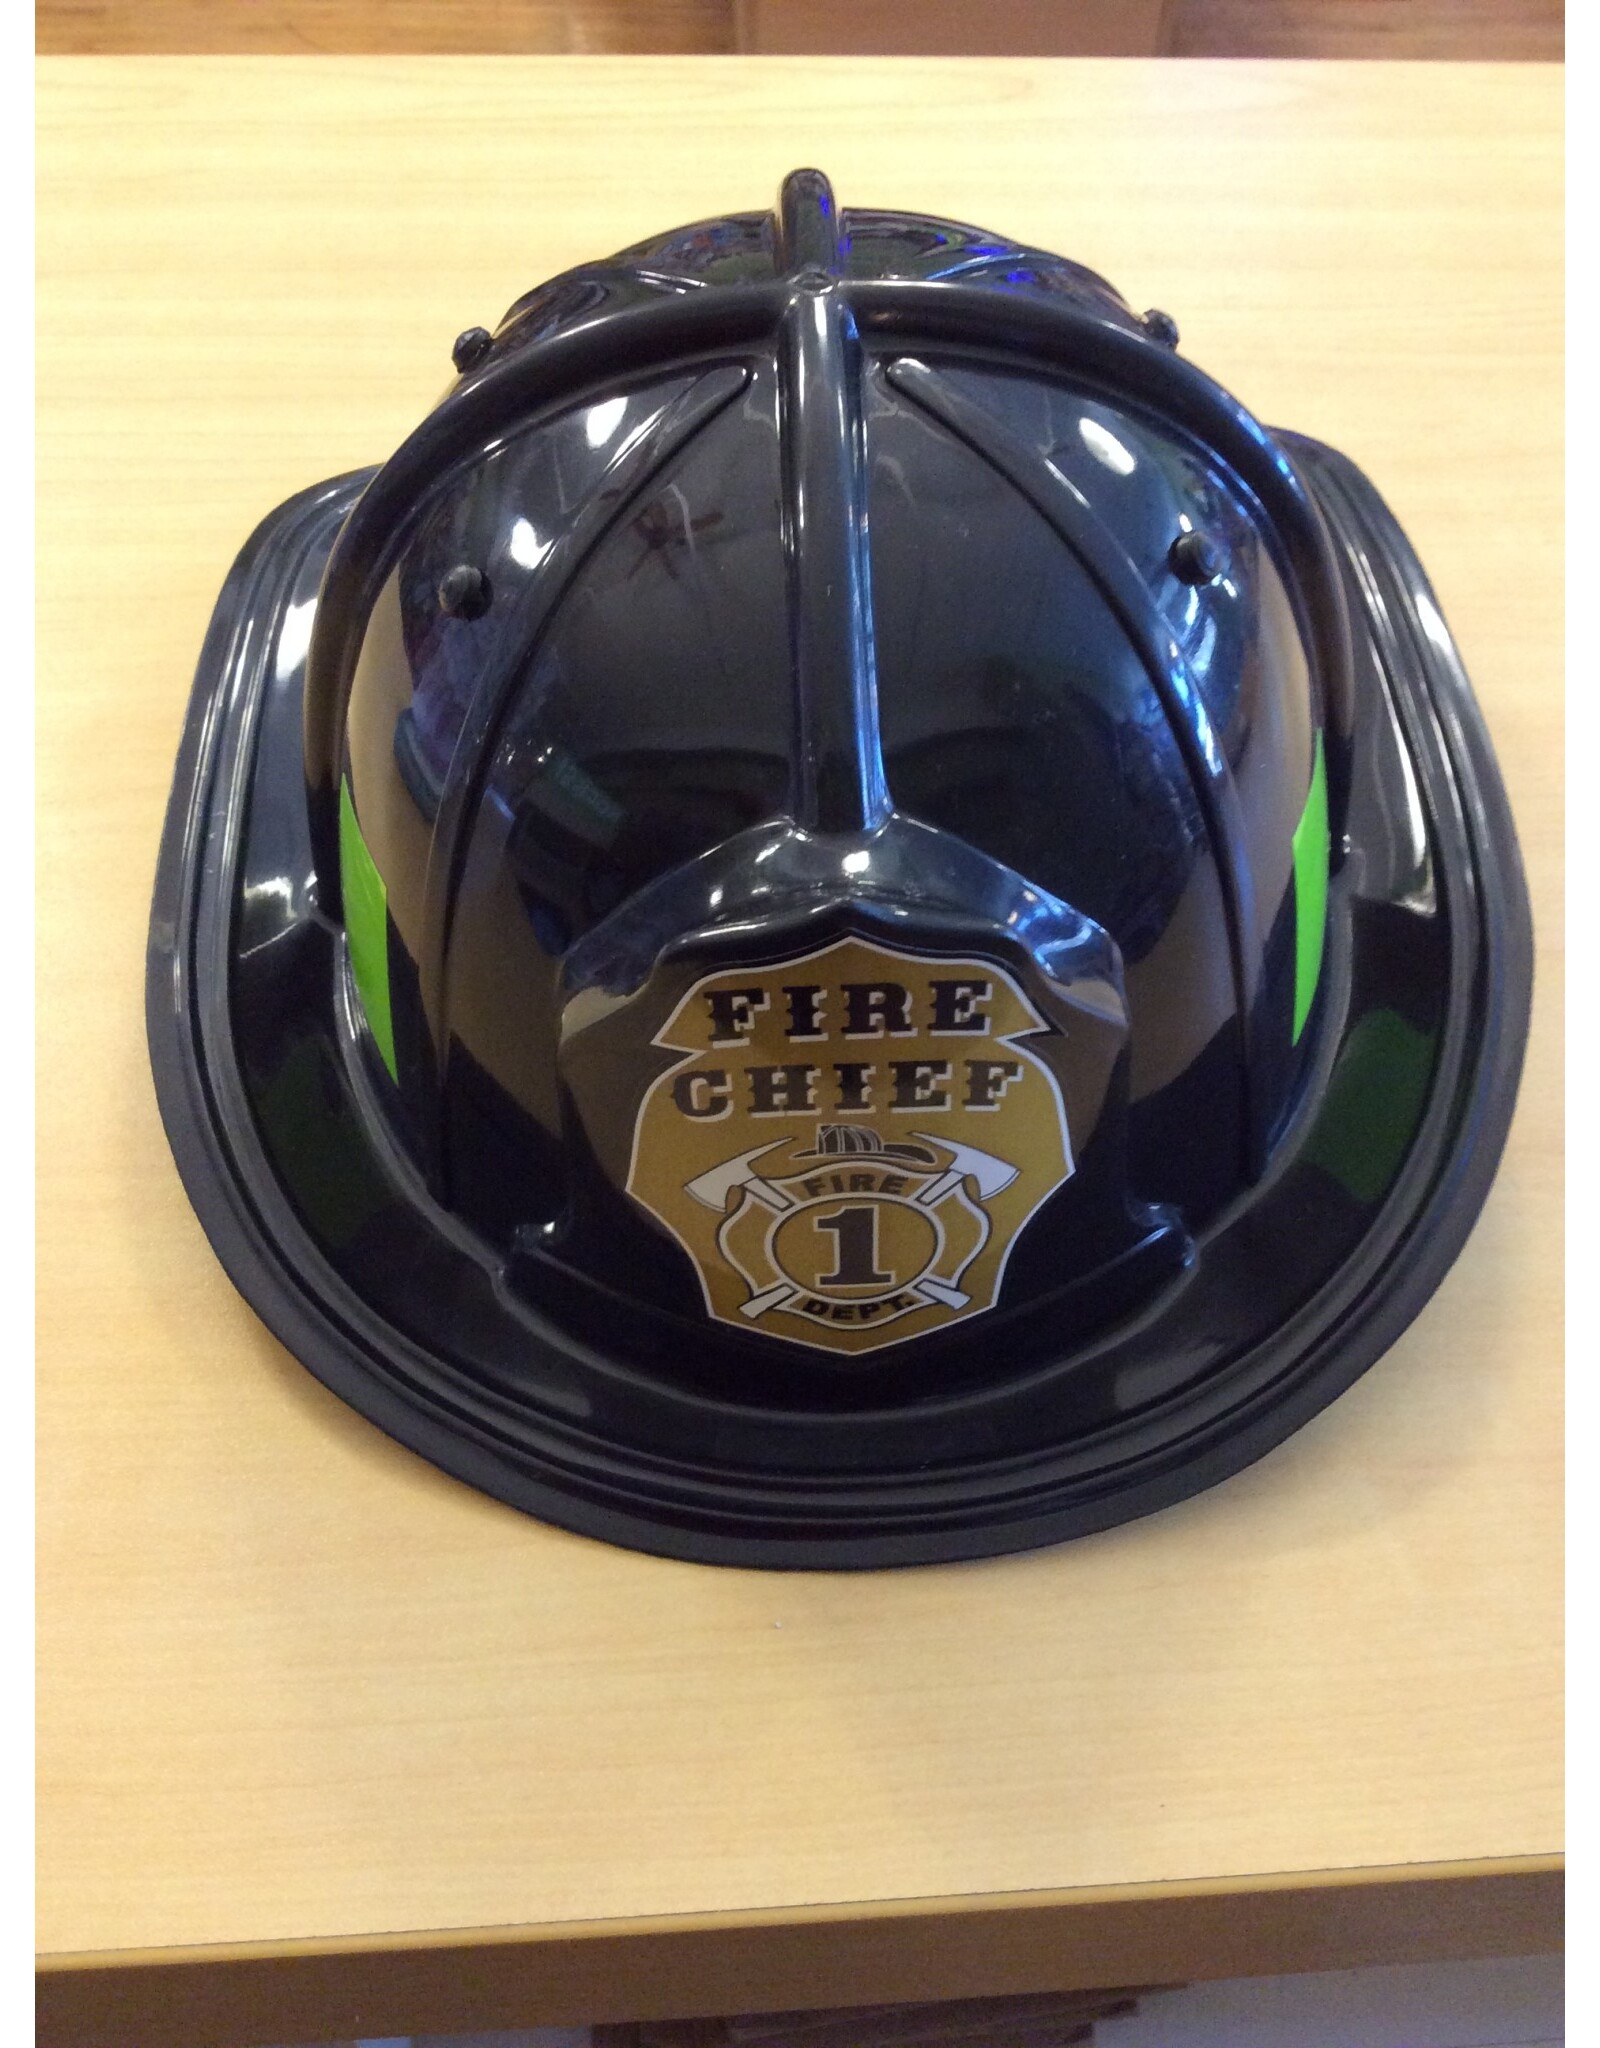 Aeromax Jr. Firefighter Helmet Black